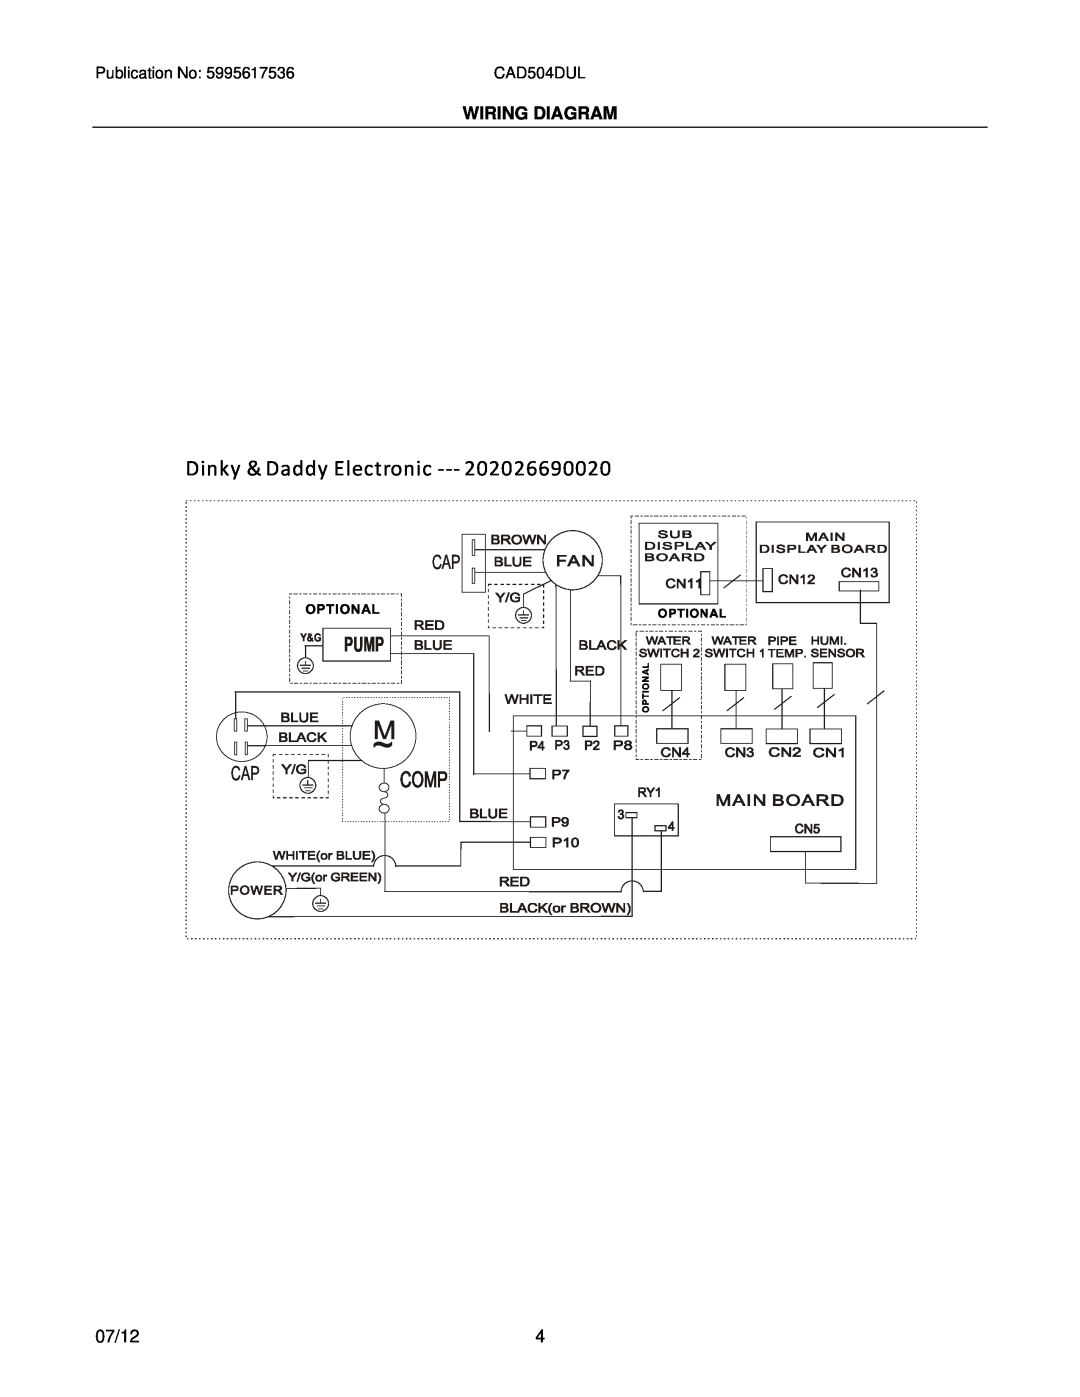 Frigidaire CAD504DUL12 manual Wiring Diagram, Dinky & Daddy Electronic, Pump Blue, Comp, Cap B Lue, 07/12, Main Board 